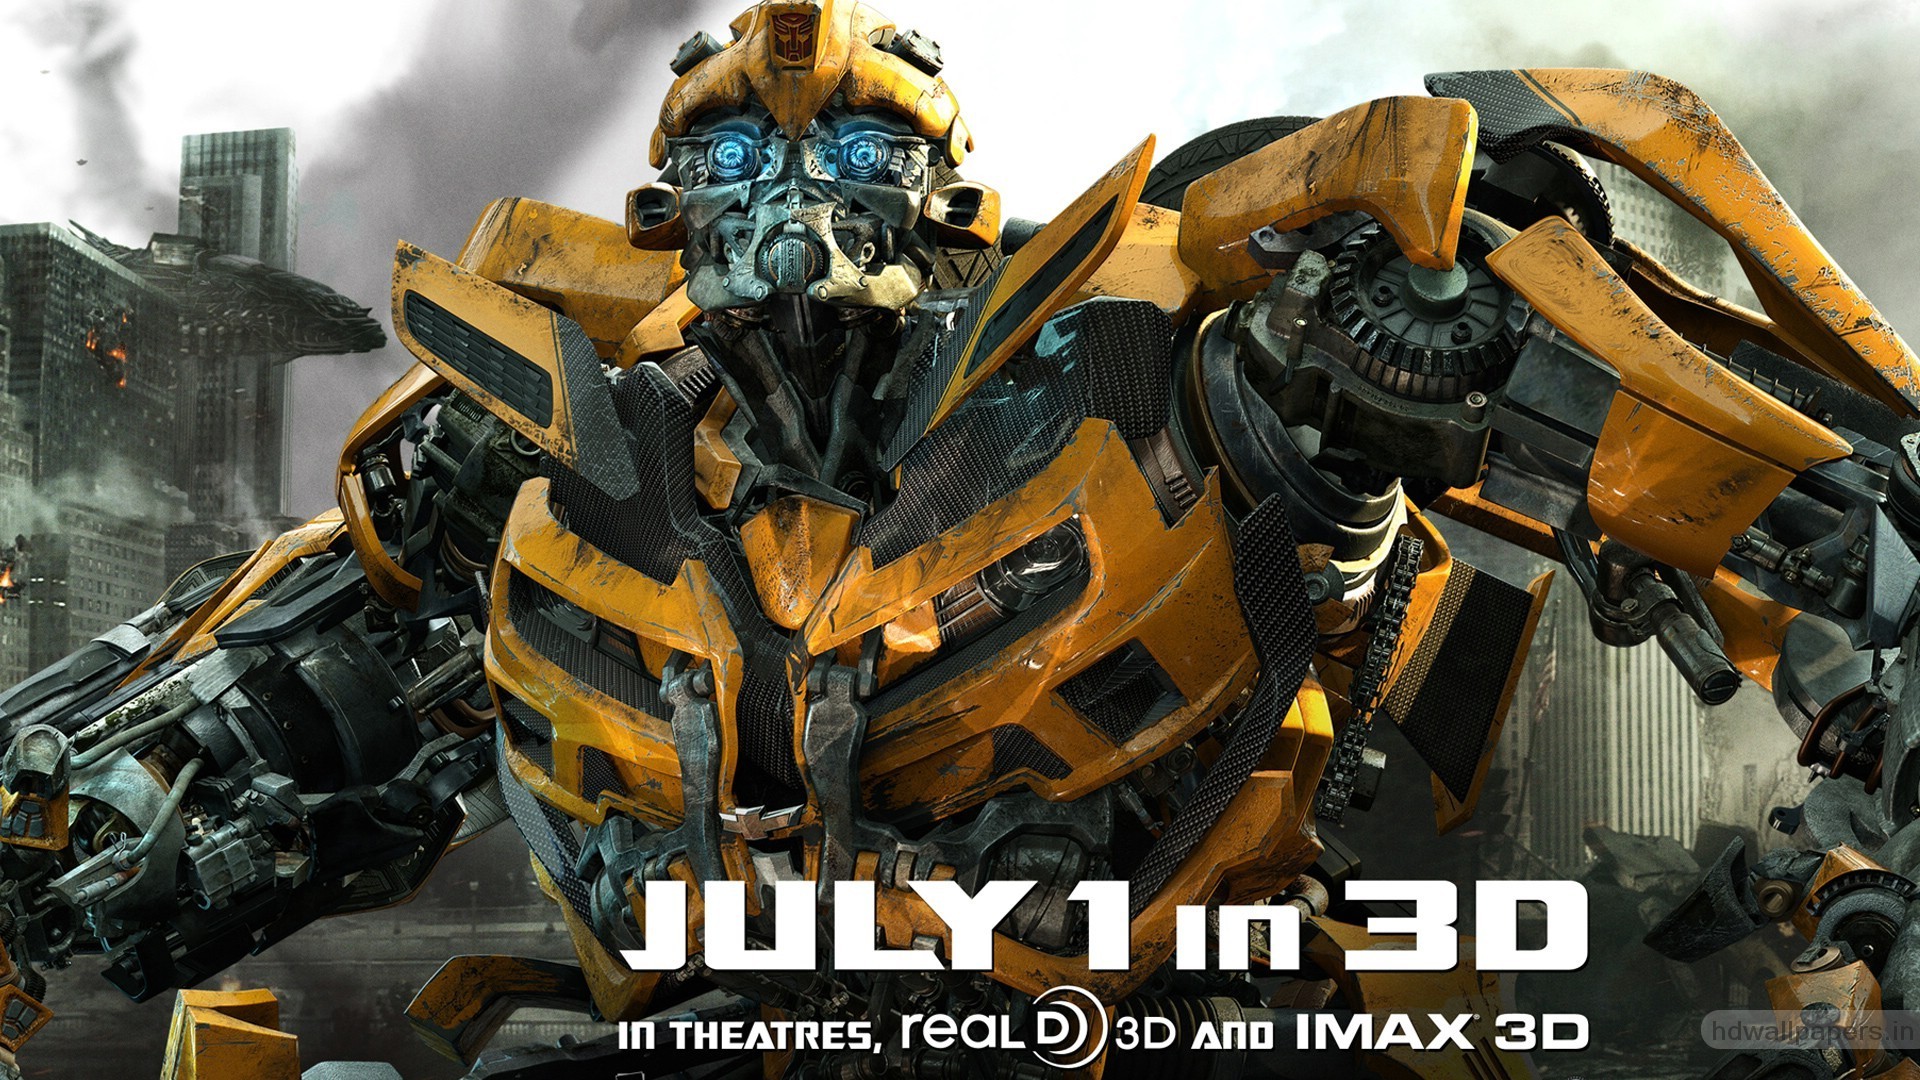 General 1920x1080 movies Transformers Bumblebee (transformers) Hasbro digital art